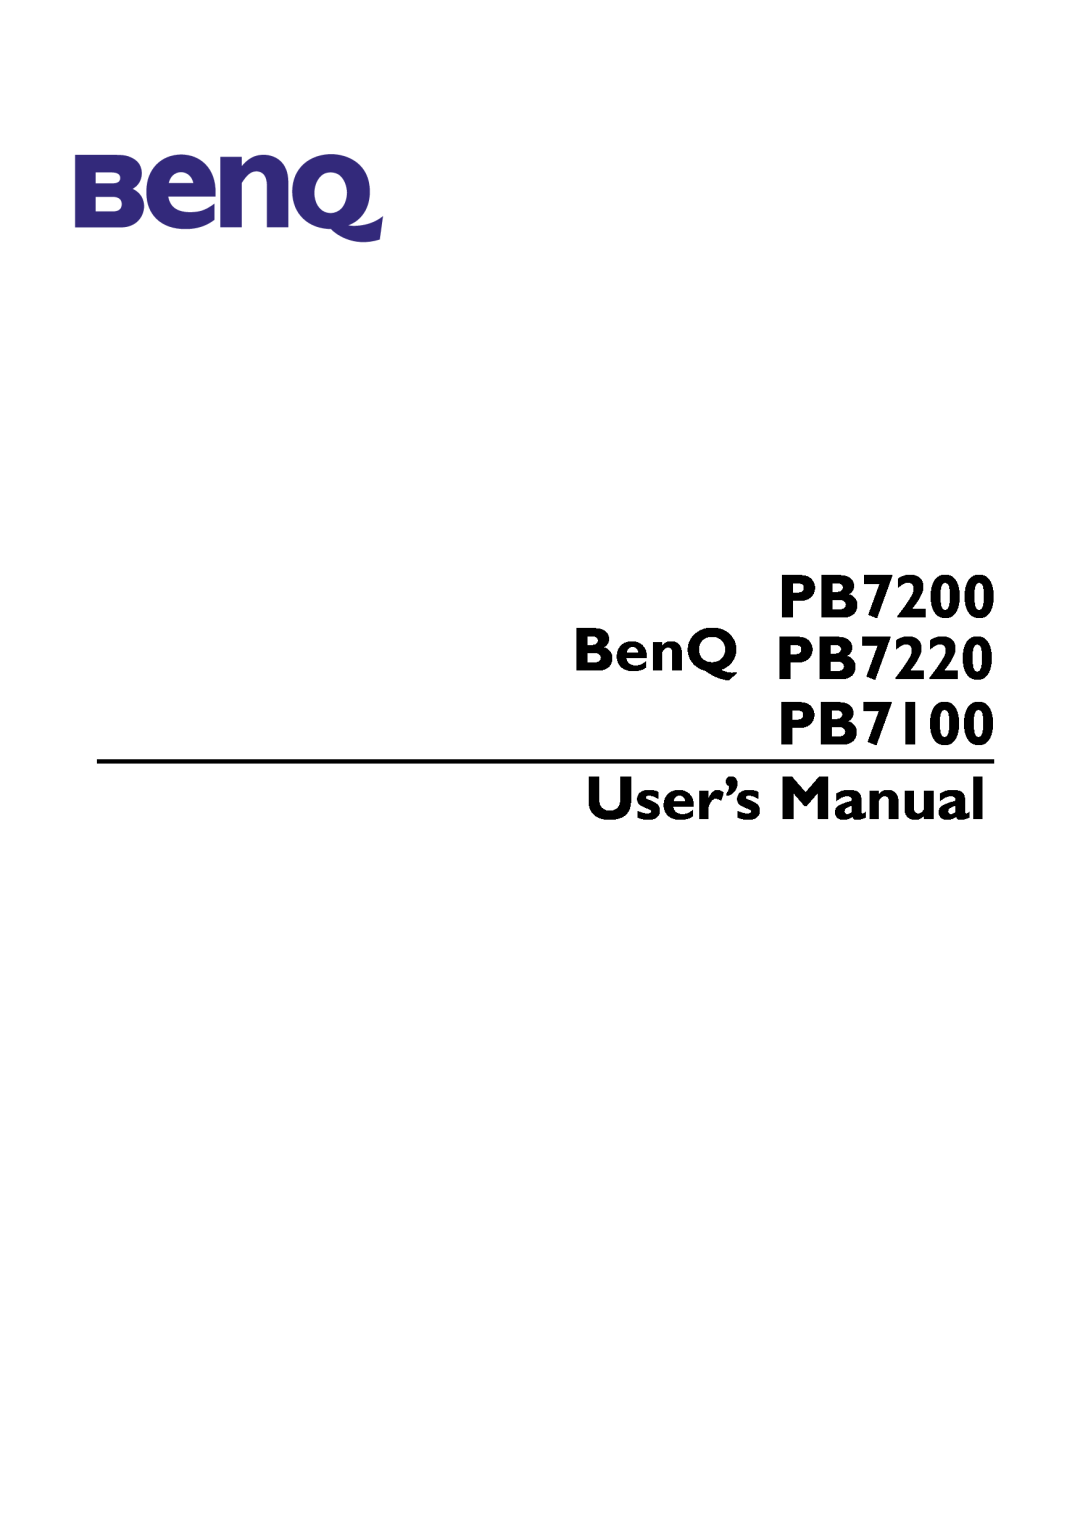 BenQ manual PB7200 BenQ PB7220 PB7100 User’s Manual 